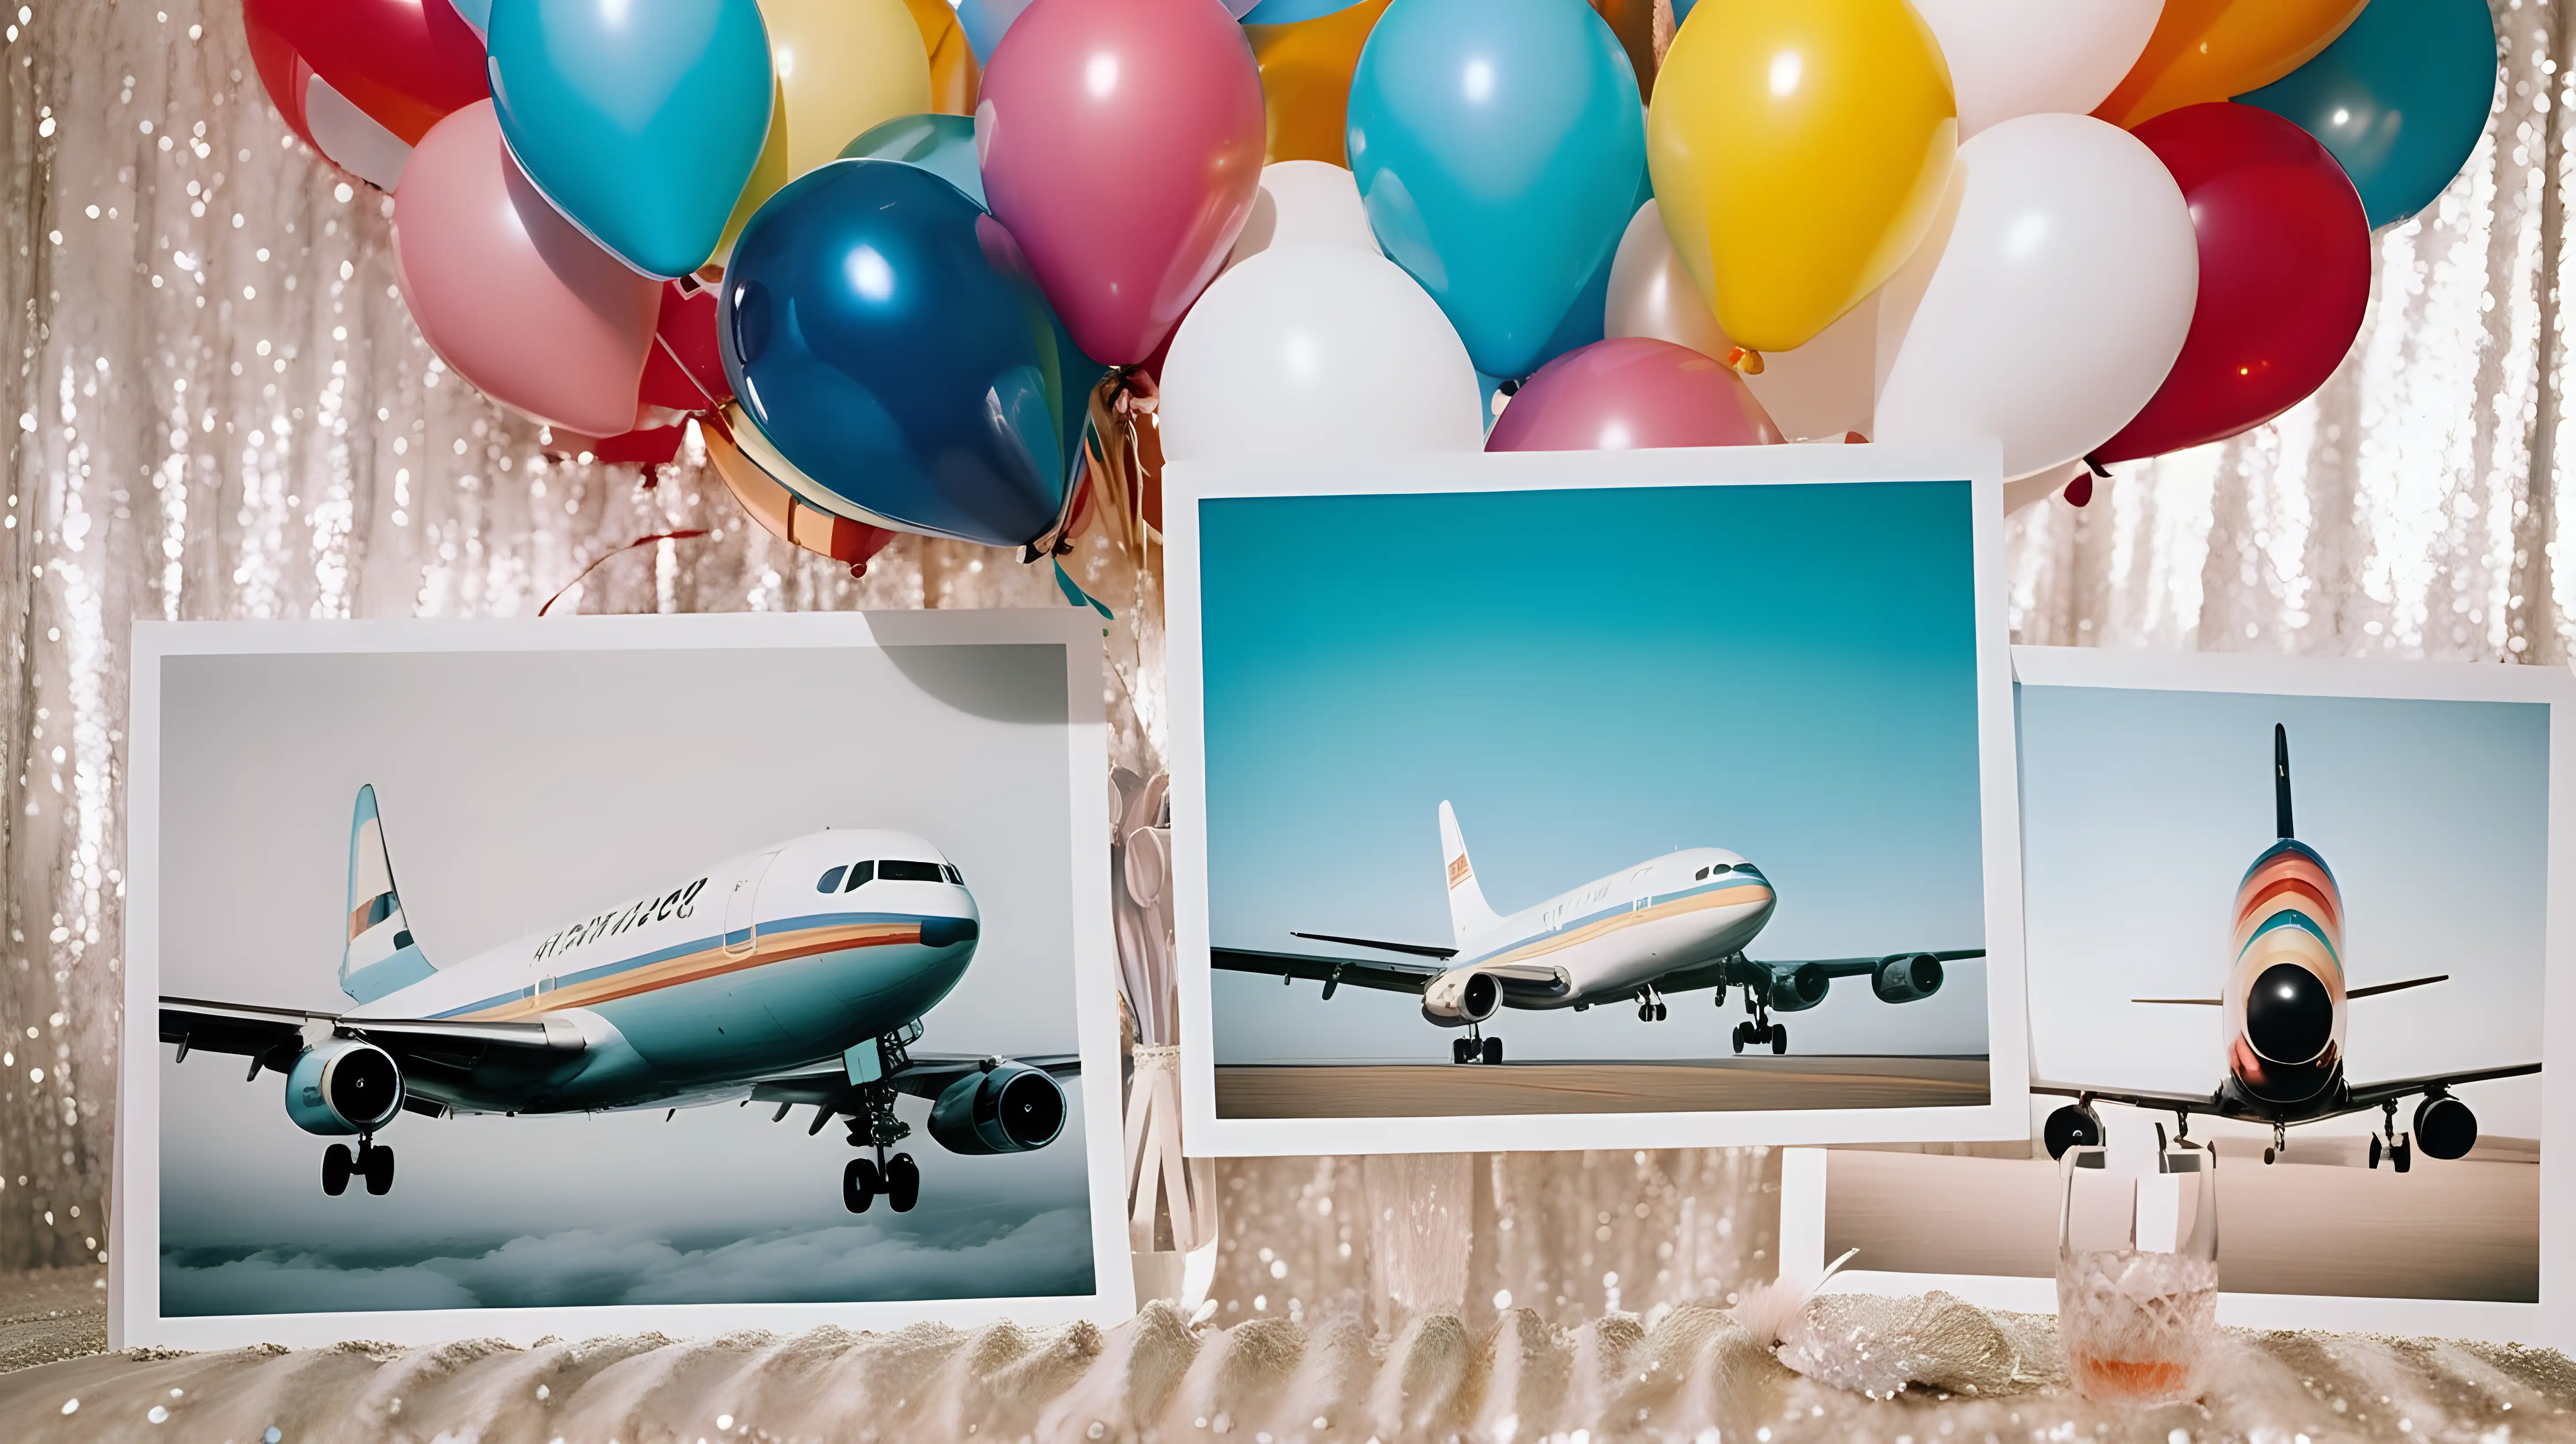 Airplane Polaroids Float Amidst Festive Party Props